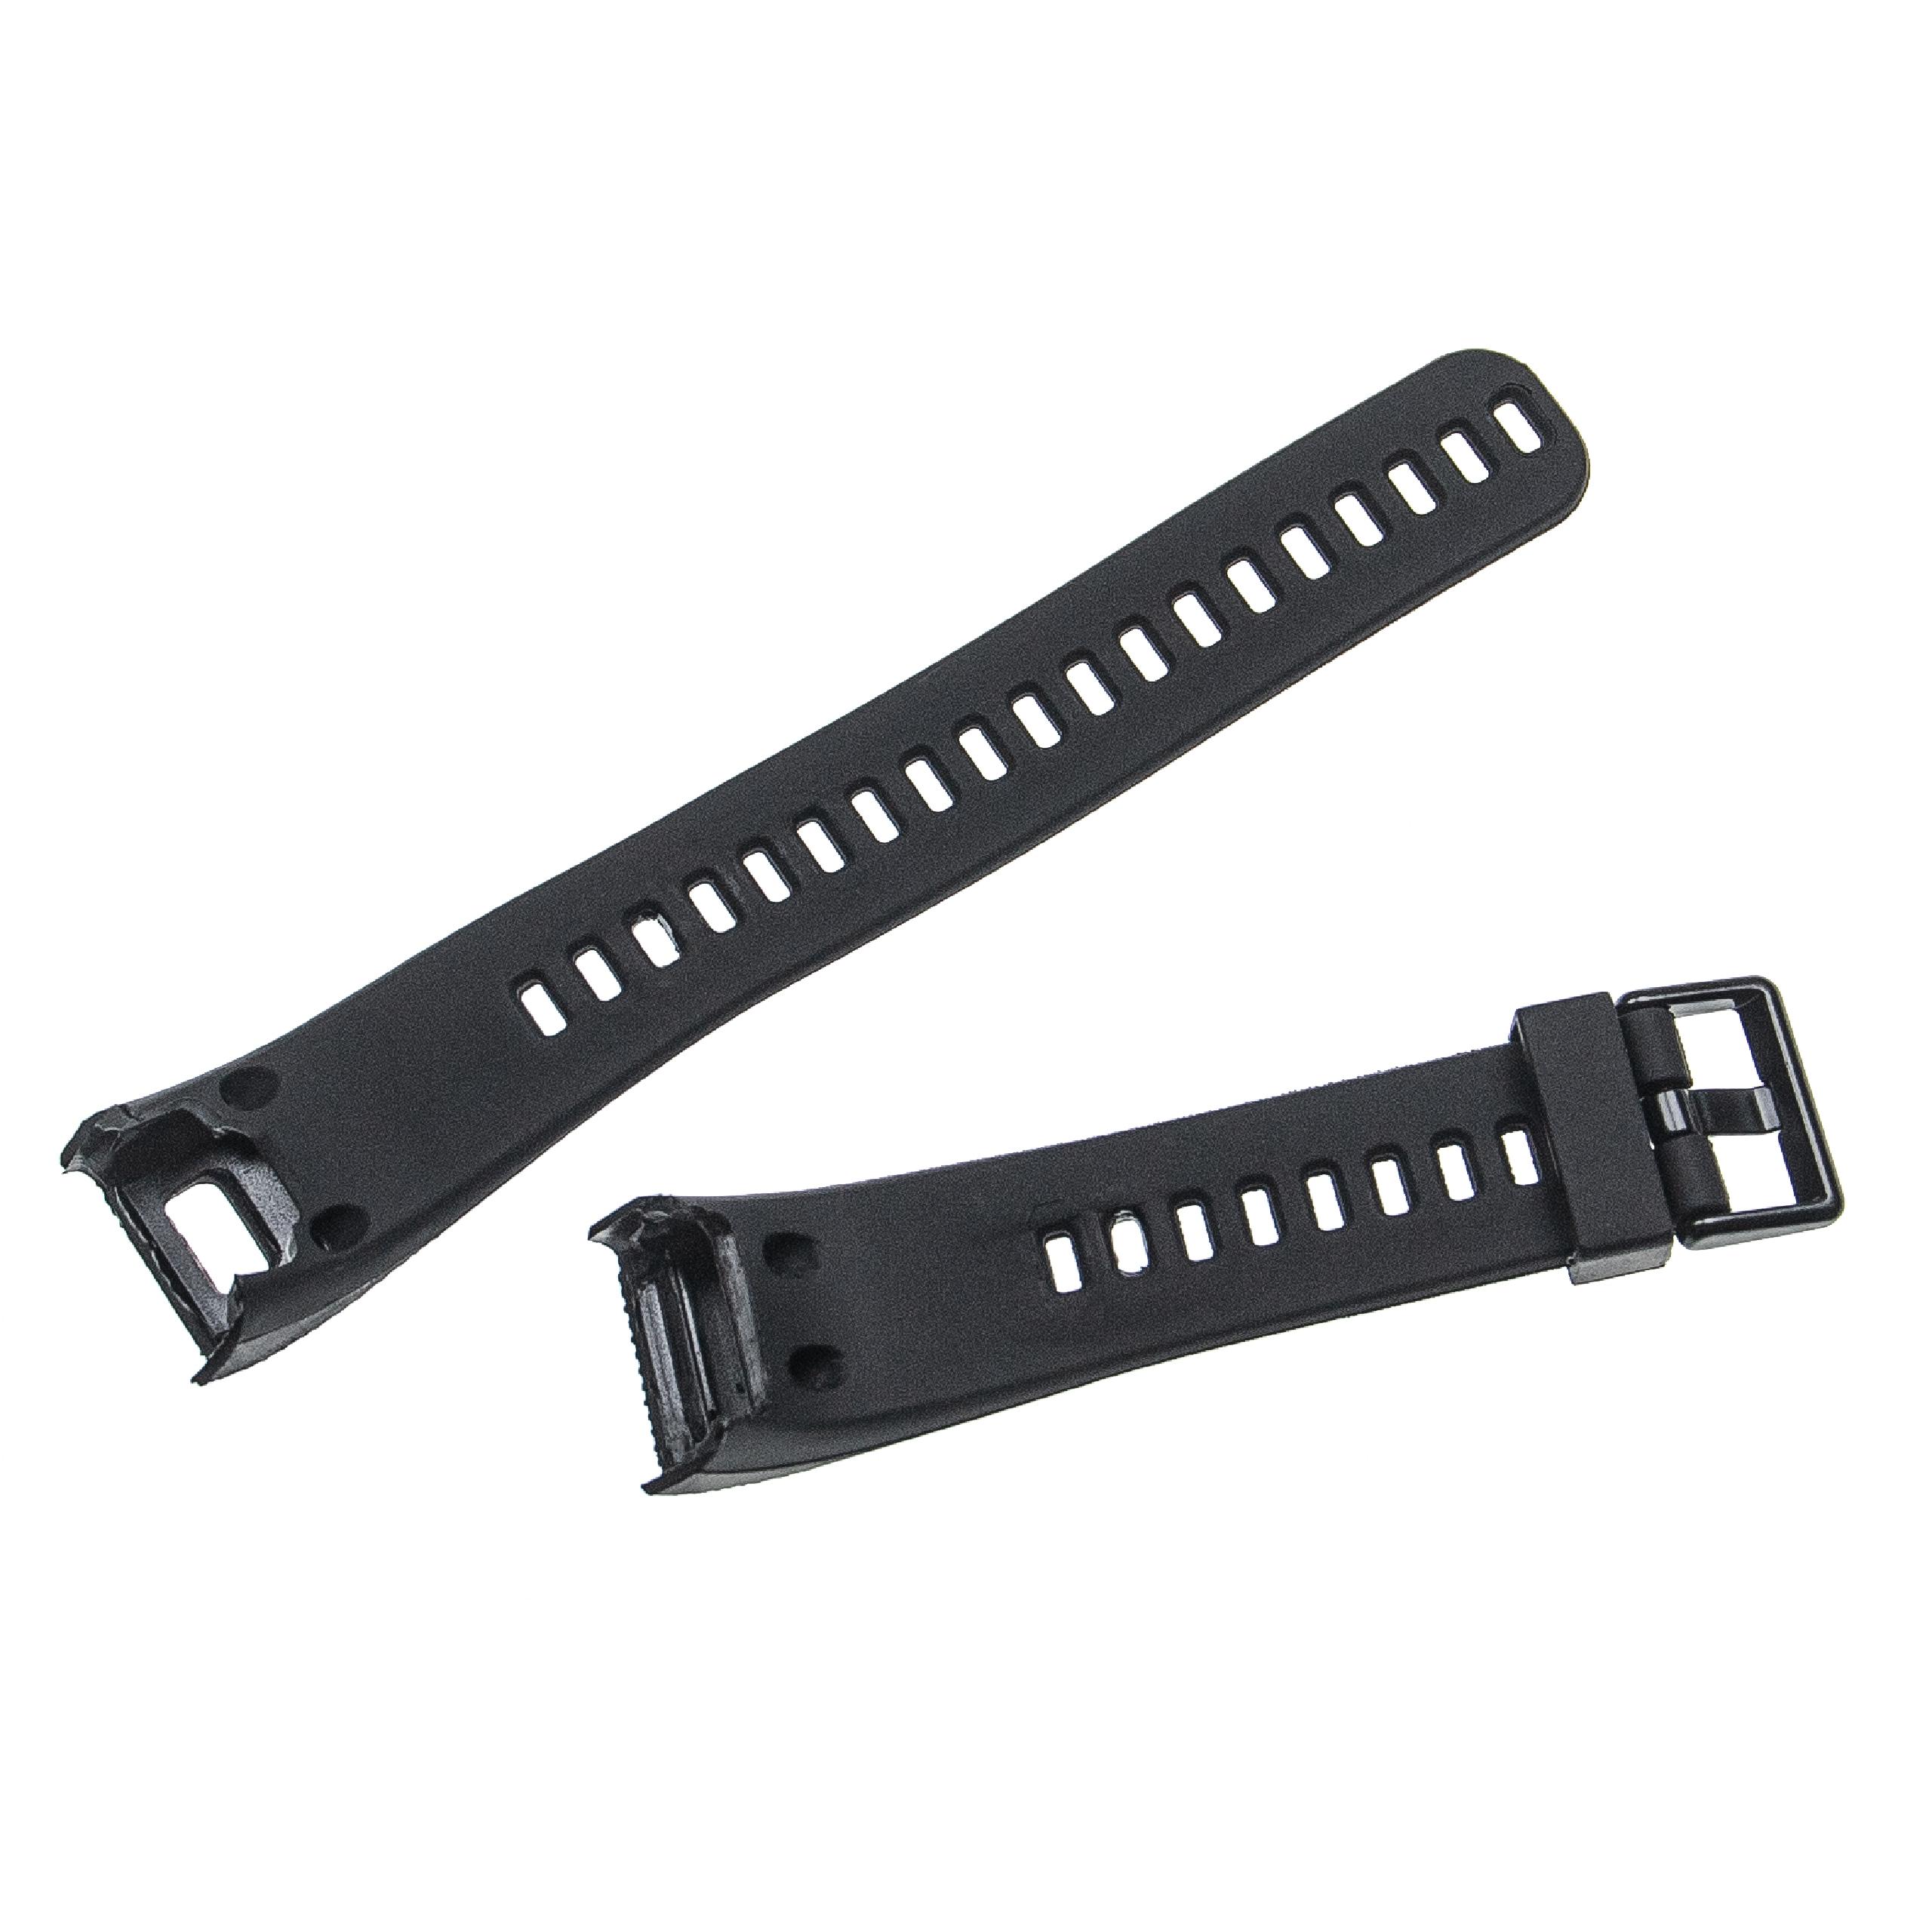 wristband for Garmin Vivosmart Smartwatch - 12.7 + 8.8 cm long, 20mm wide, TPU, black